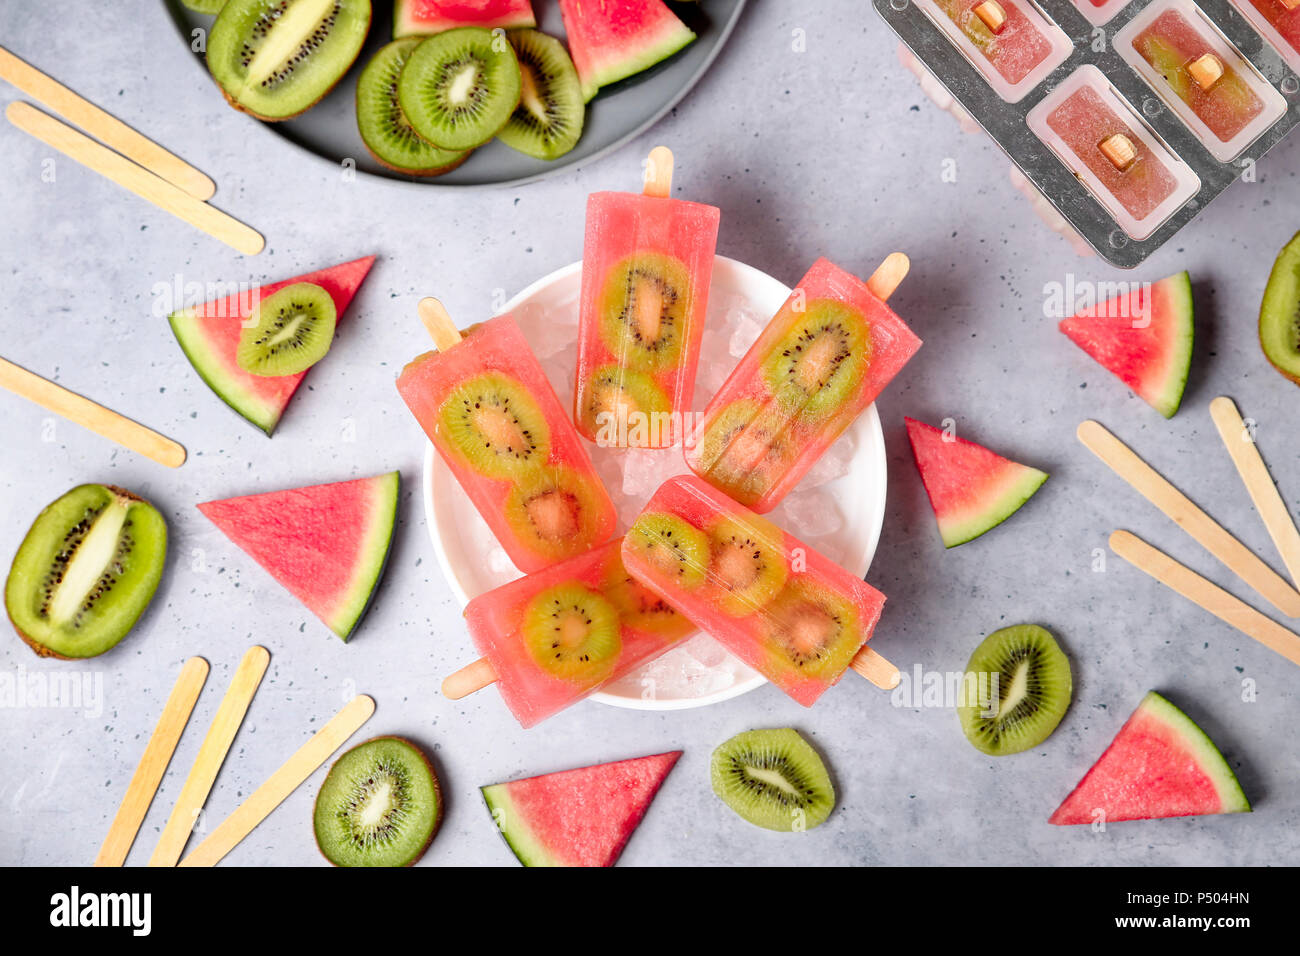 Homemade watermelon kiwi ice lollies Stock Photo